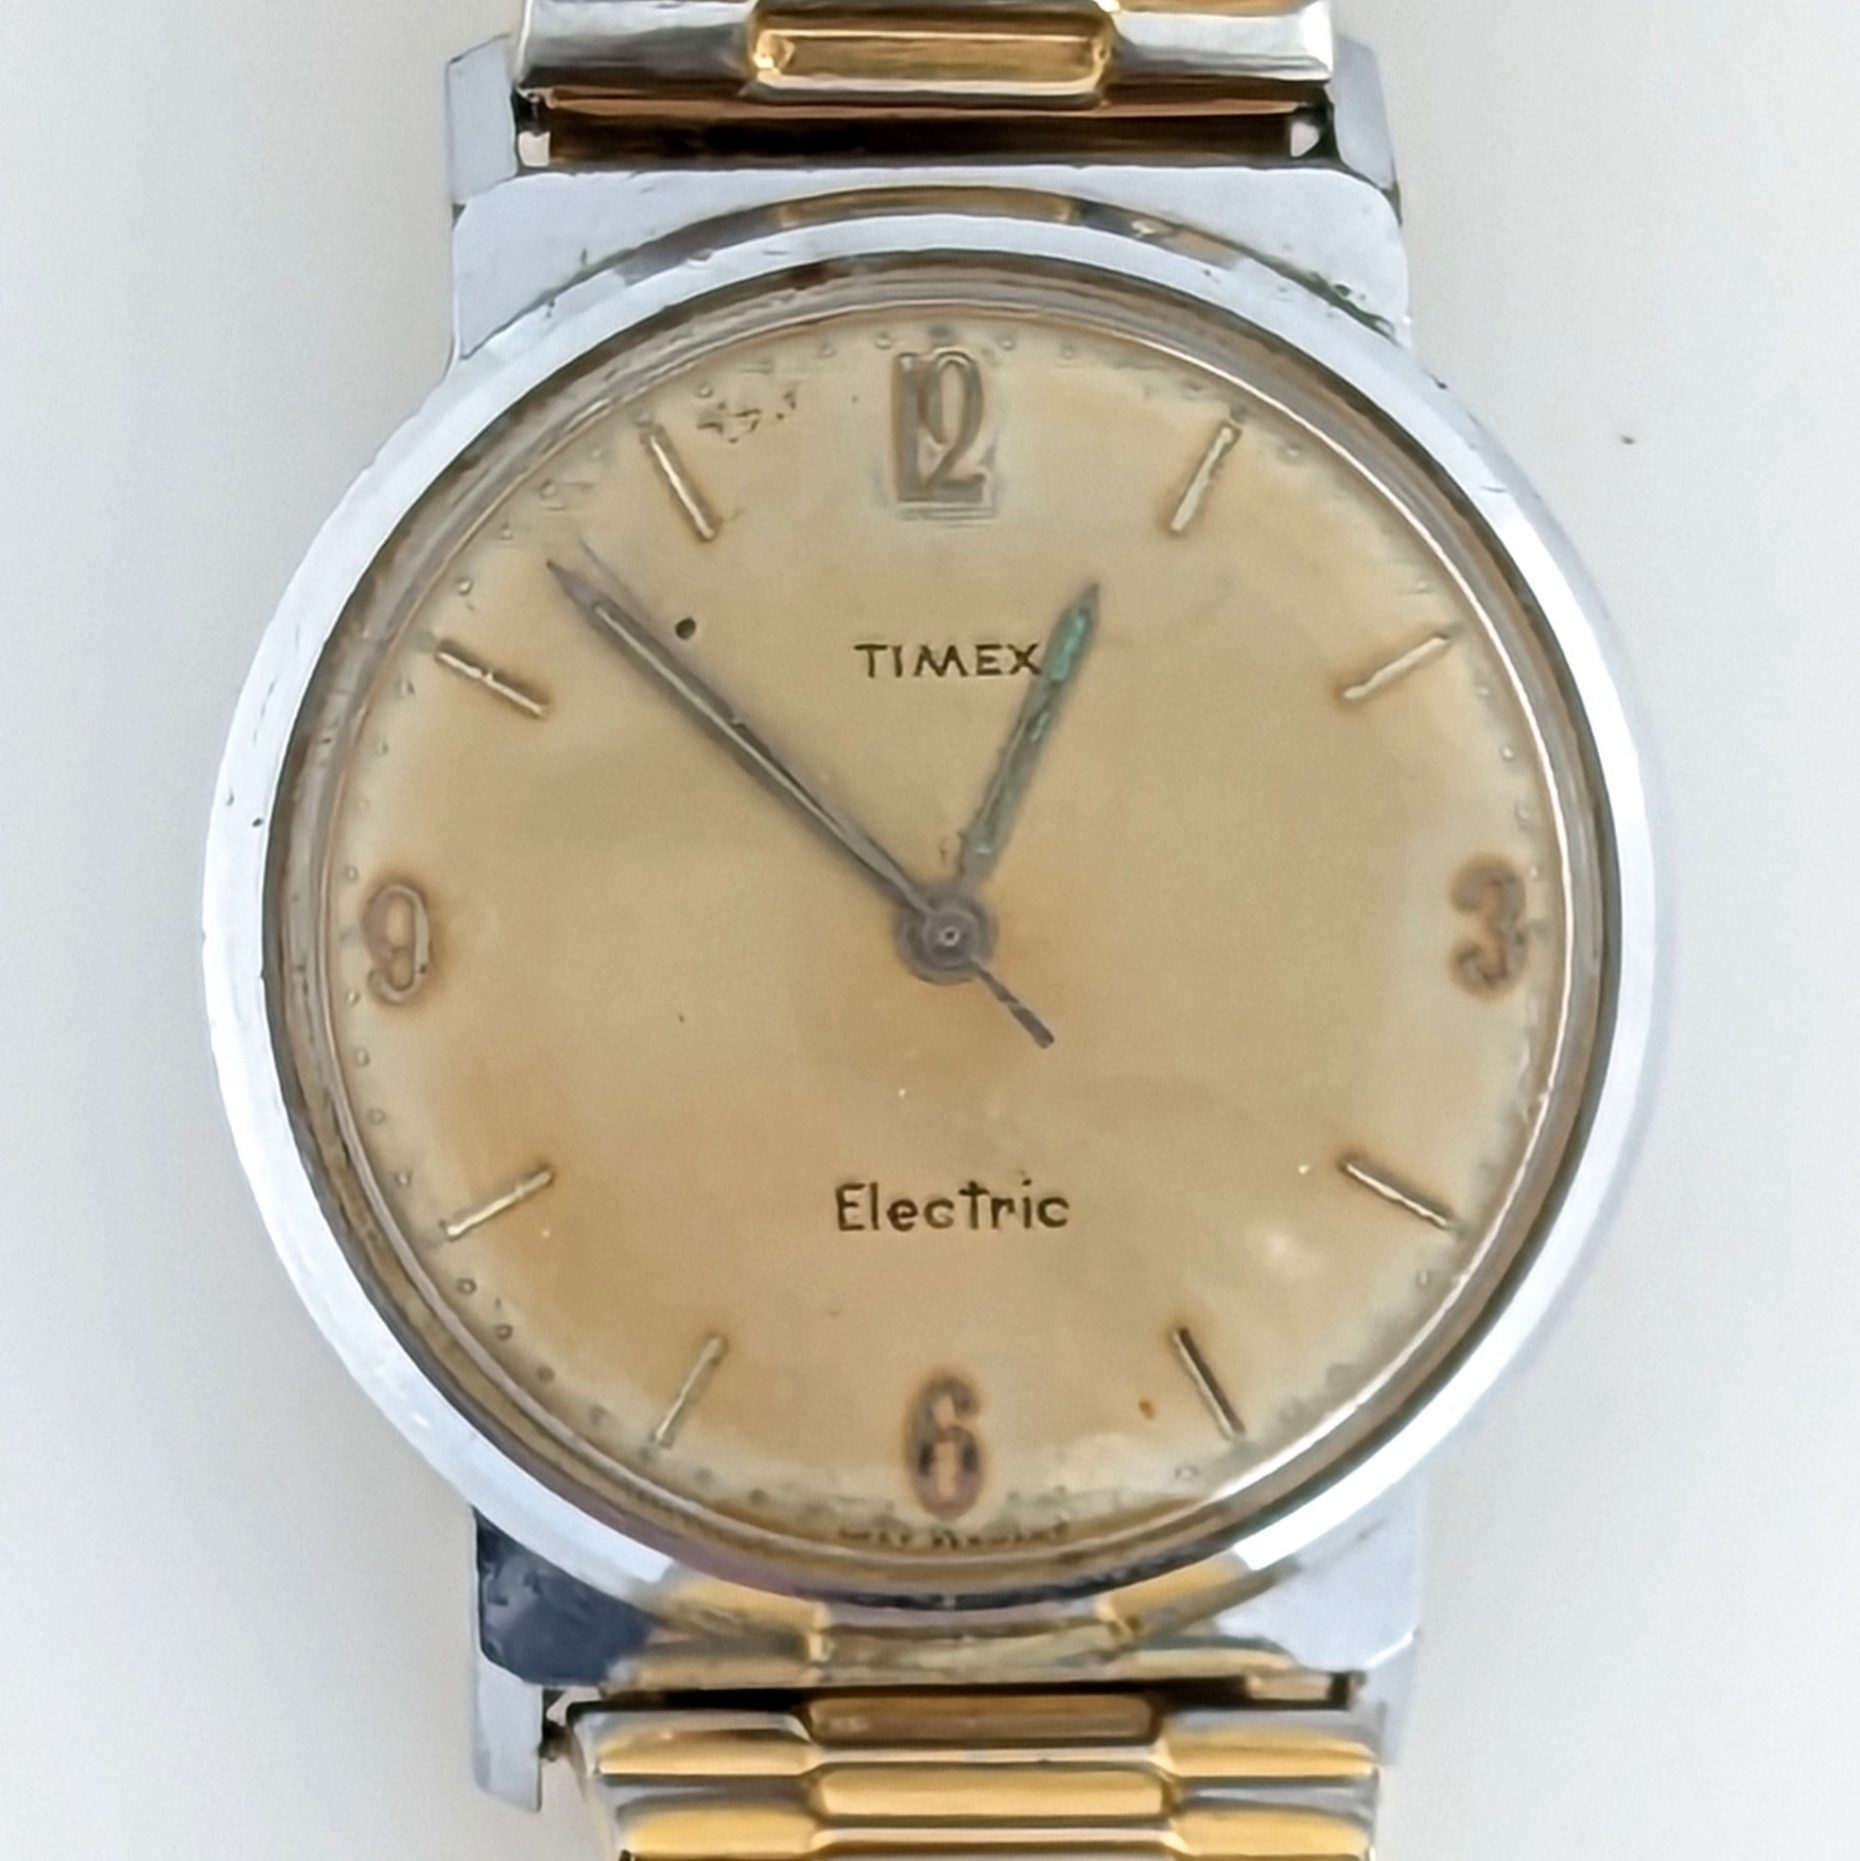 Timex Electric 9026 6763 [1963]